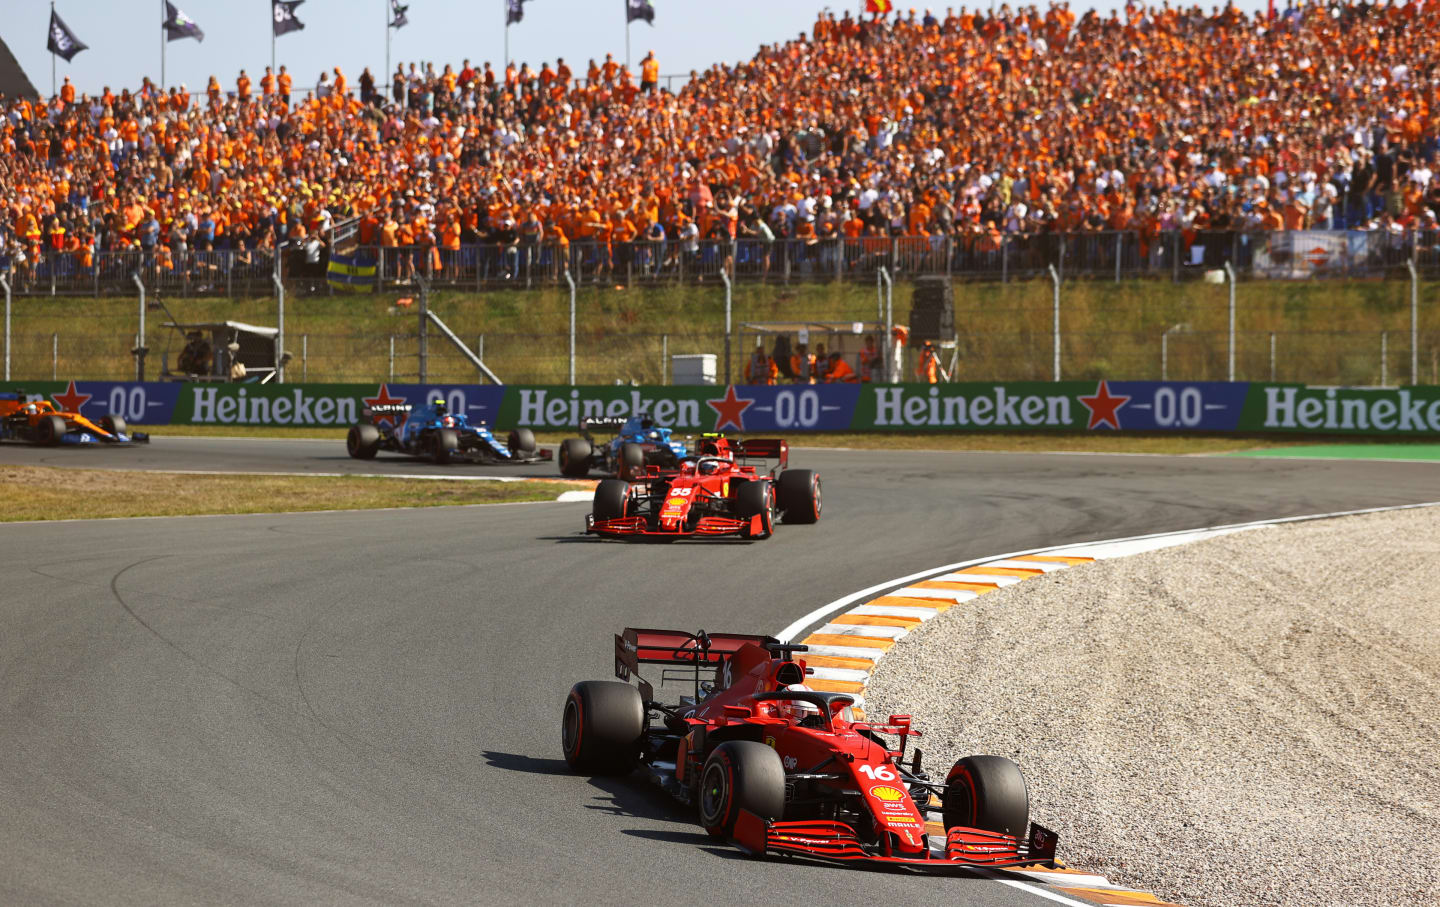 ZANDVOORT, NETHERLANDS - SEPTEMBER 05: Charles Leclerc of Monaco driving the (16) Scuderia Ferrari